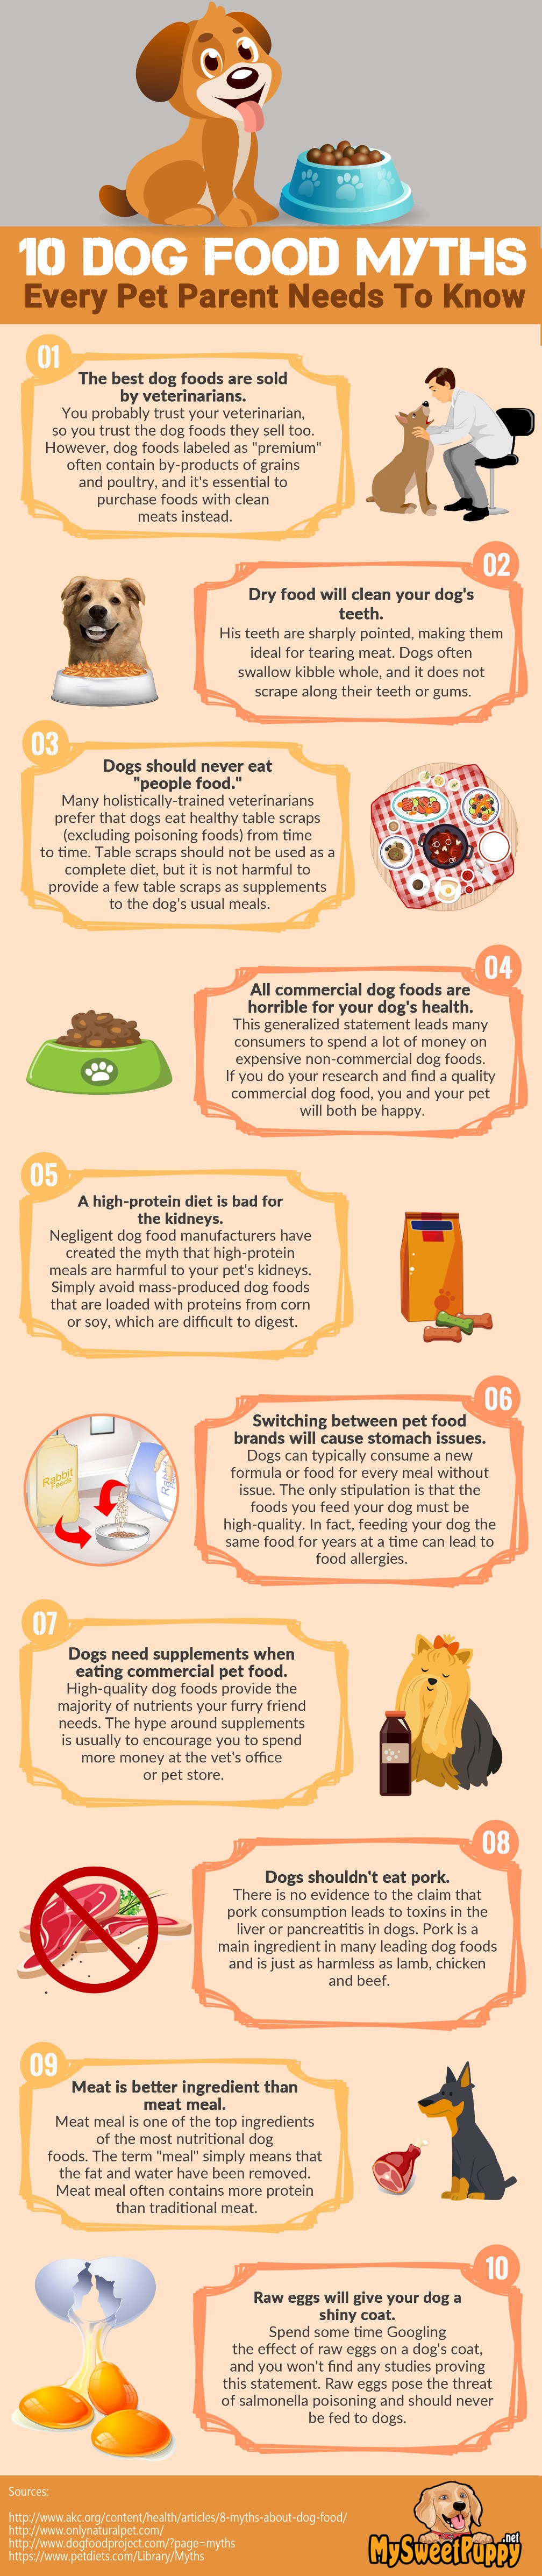 10_dog_food_myths